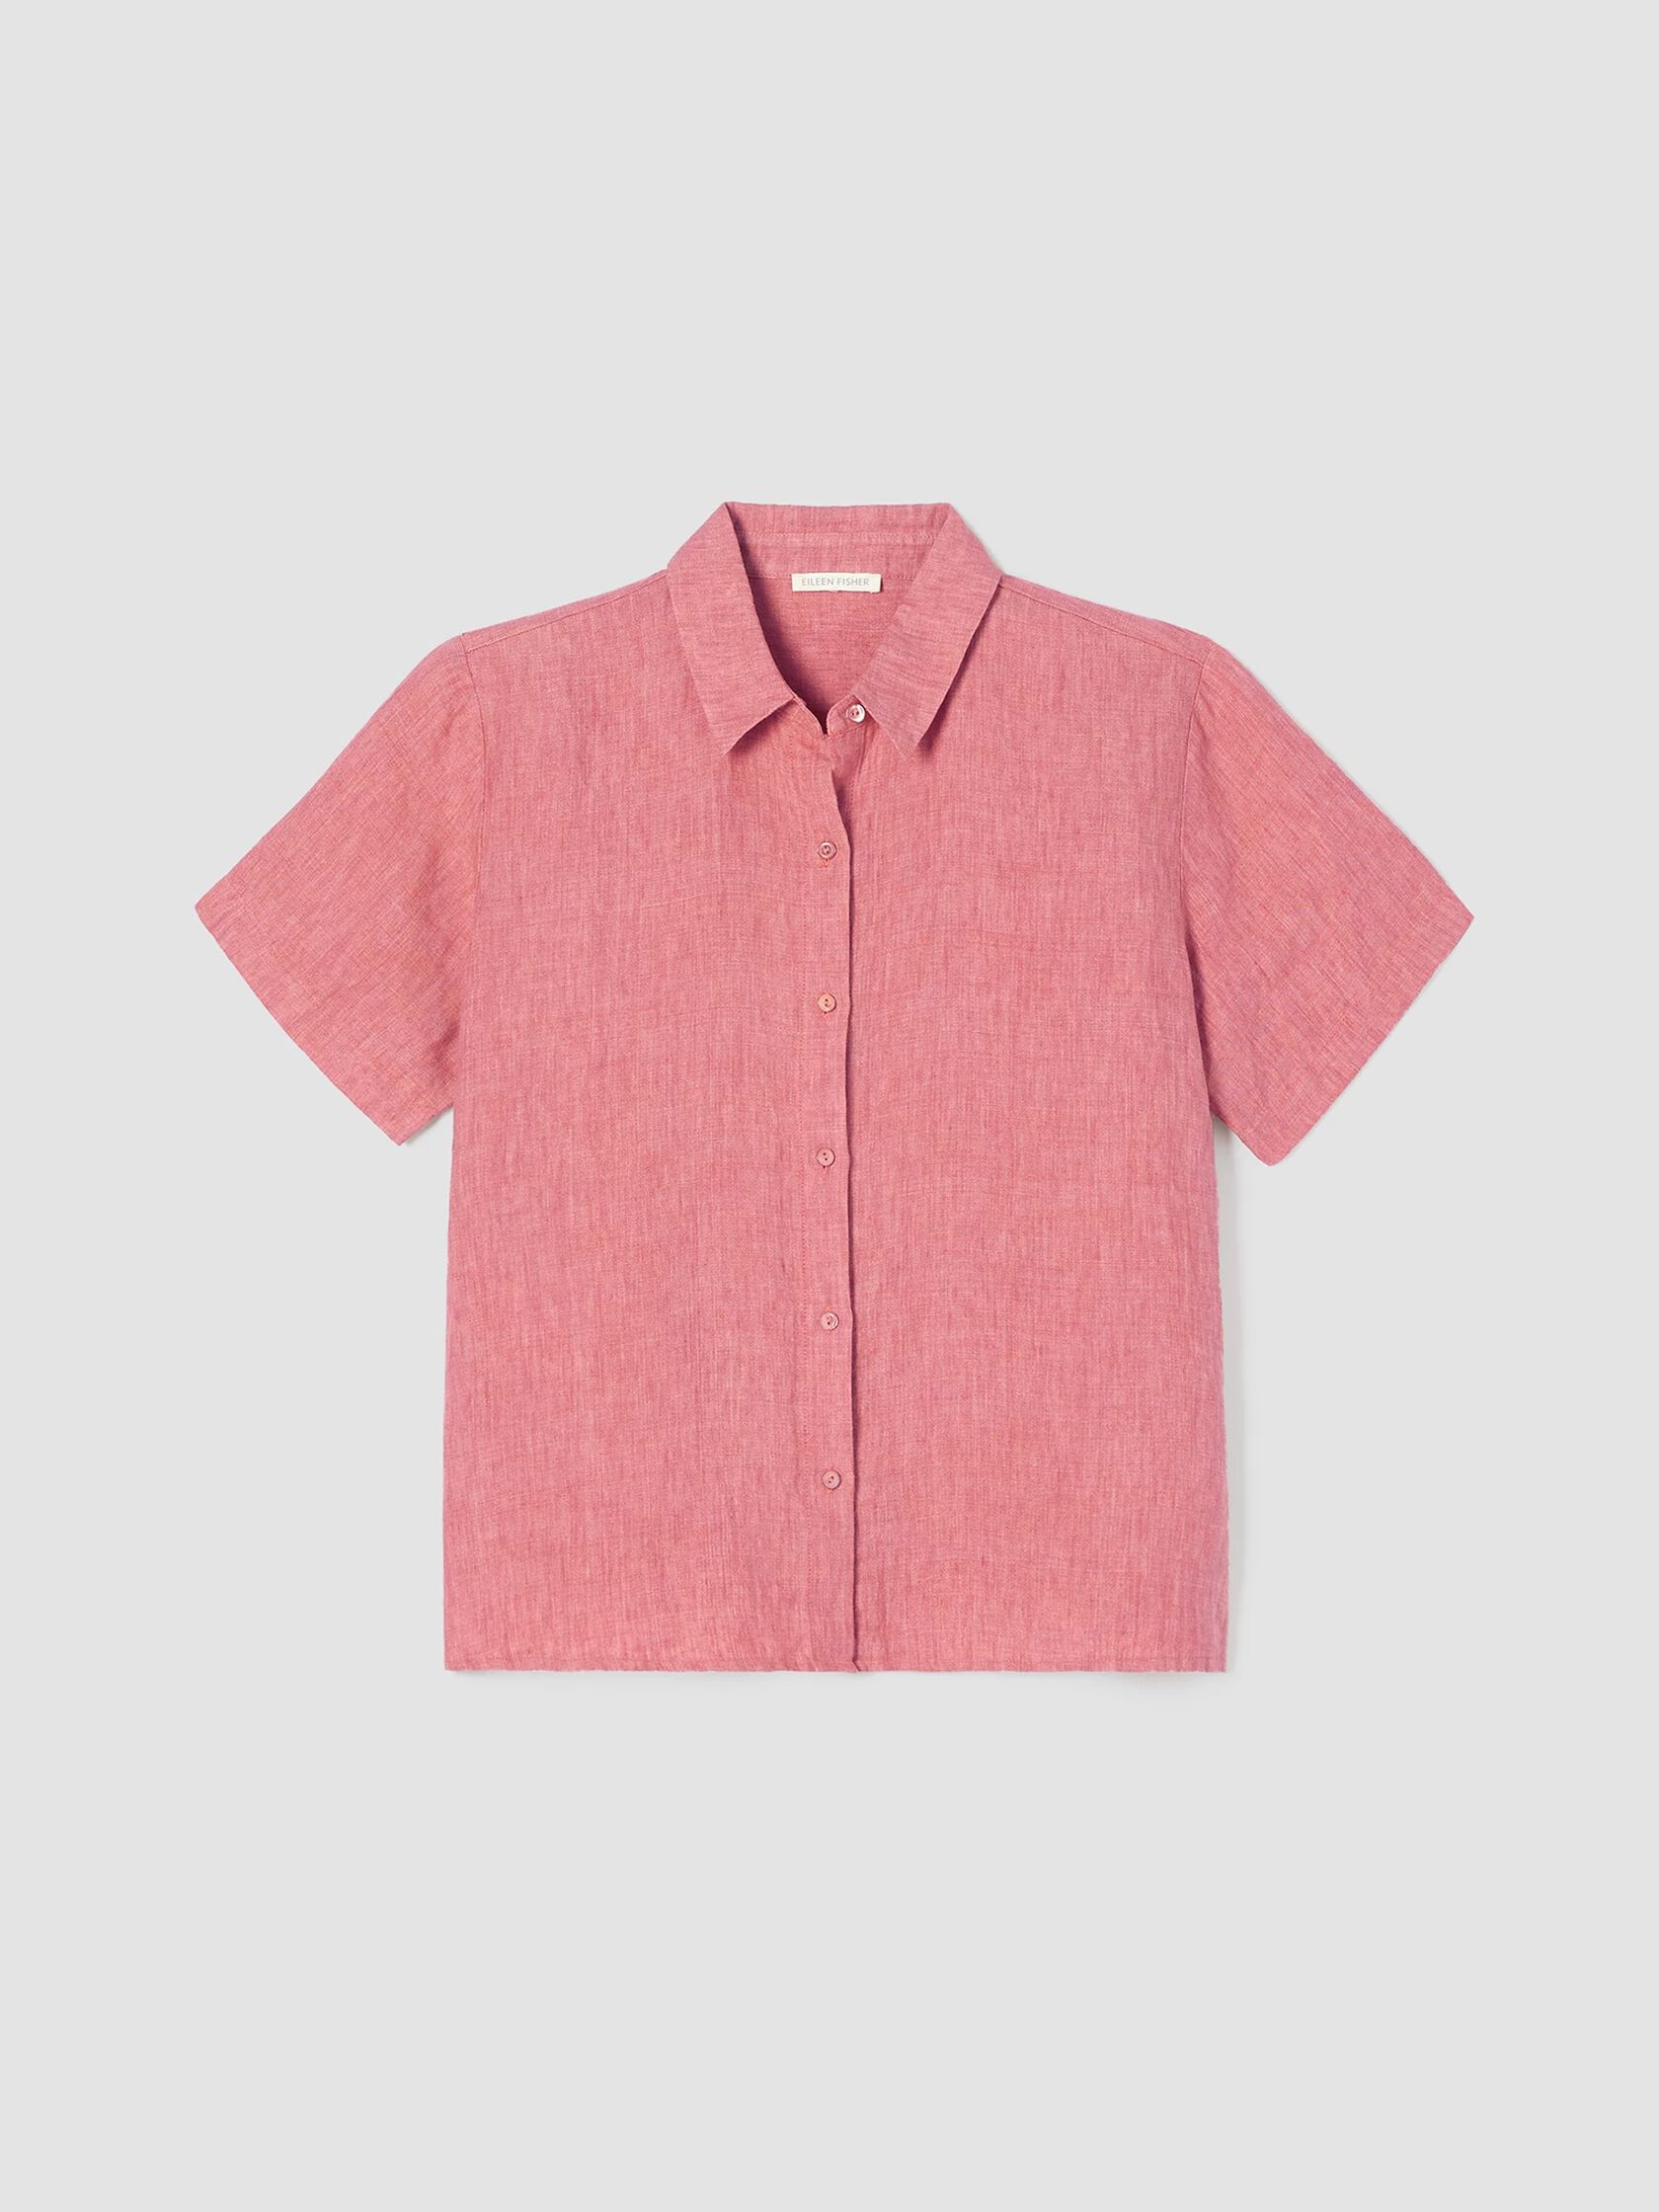 Washed Organic Linen Délavé Short-Sleeve Shirt